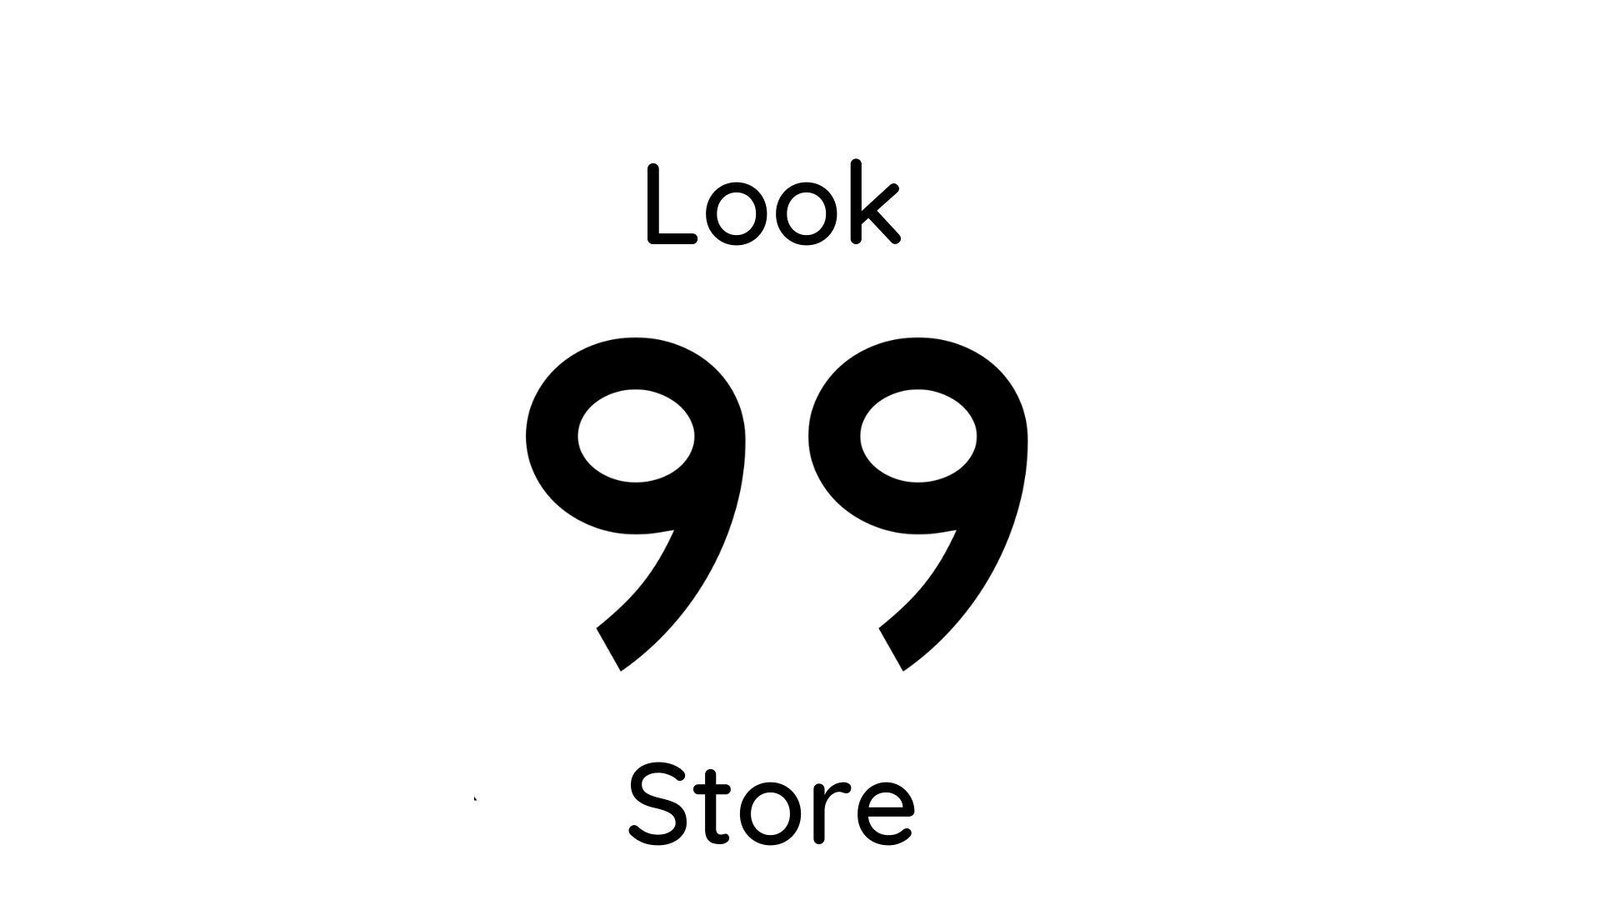 99/- store